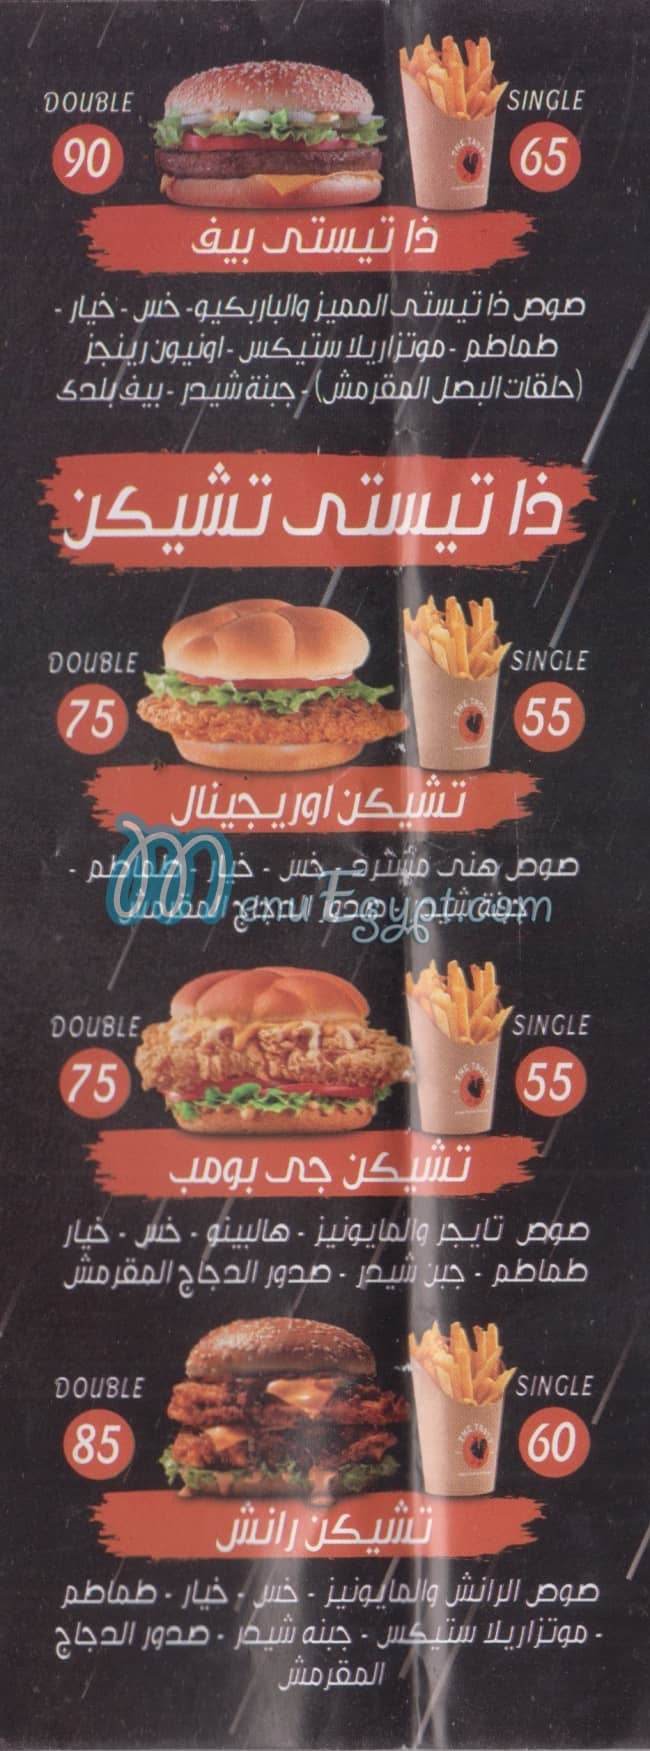 The Tasty menu prices